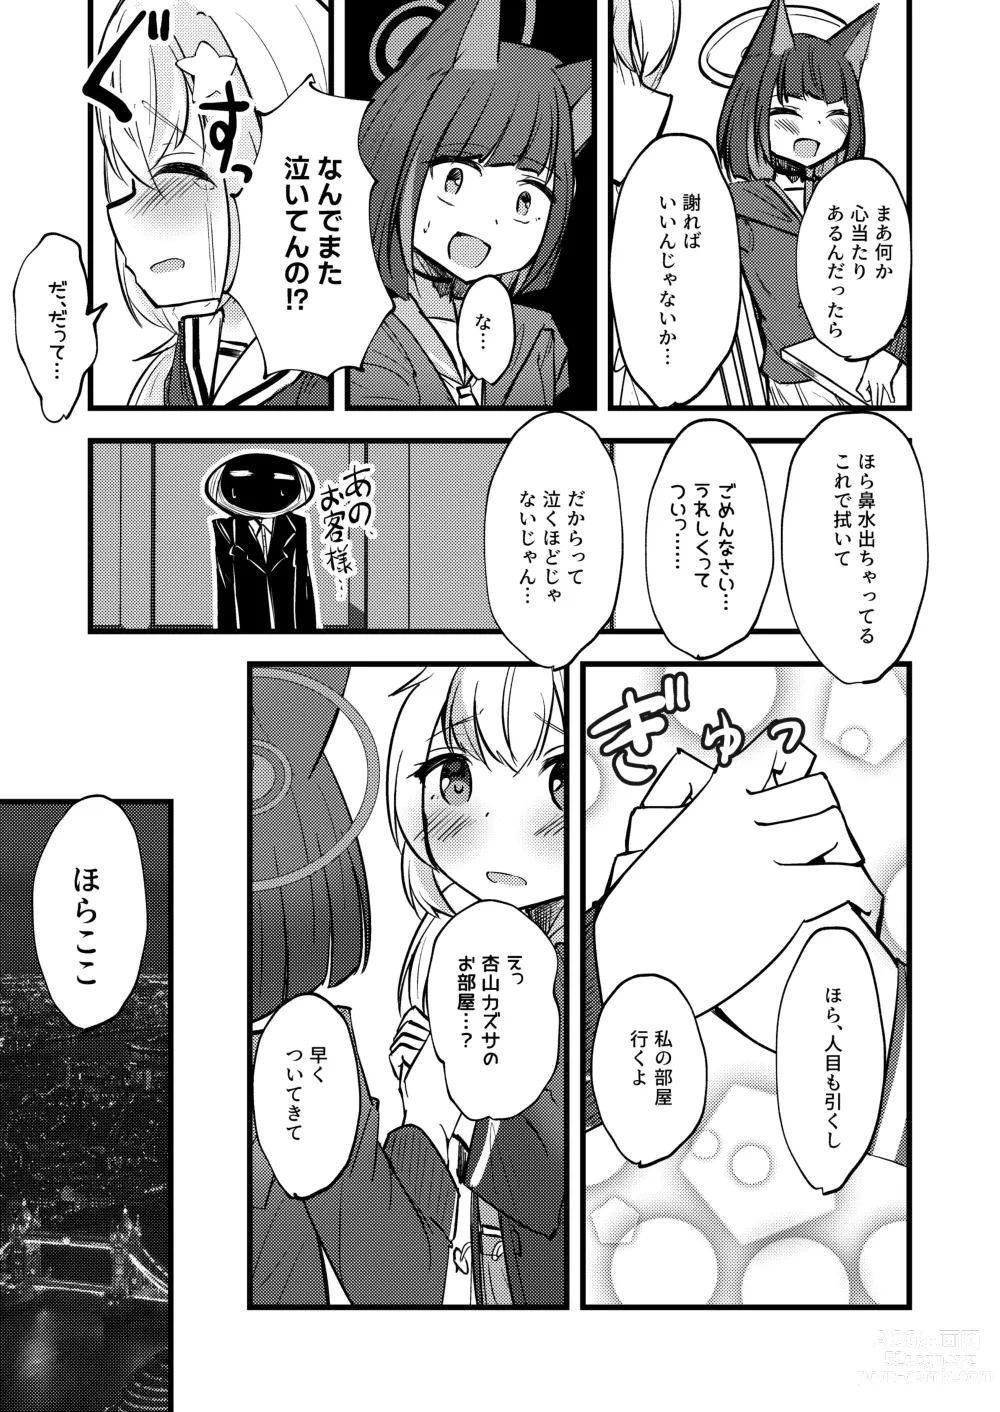 Page 9 of doujinshi KazuRei Sanka